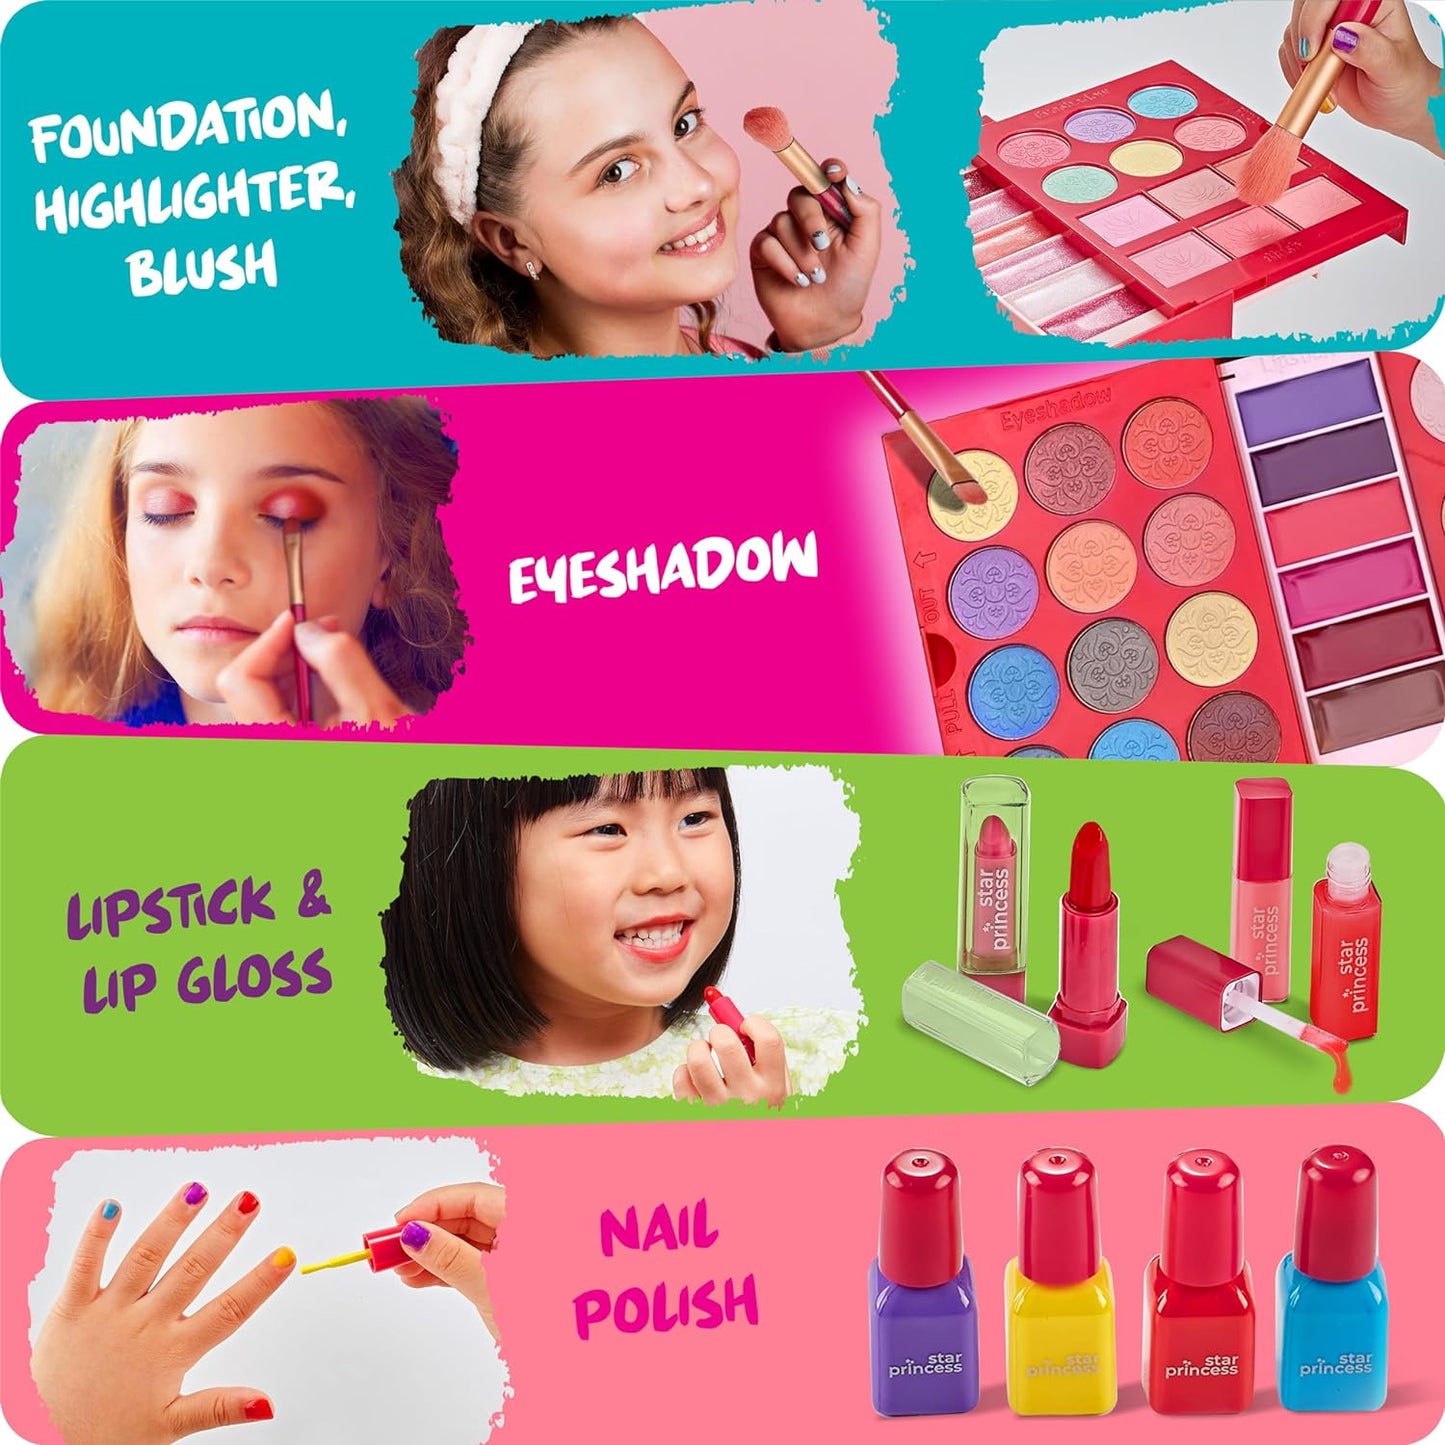 Washable Makeup Studio for Girls